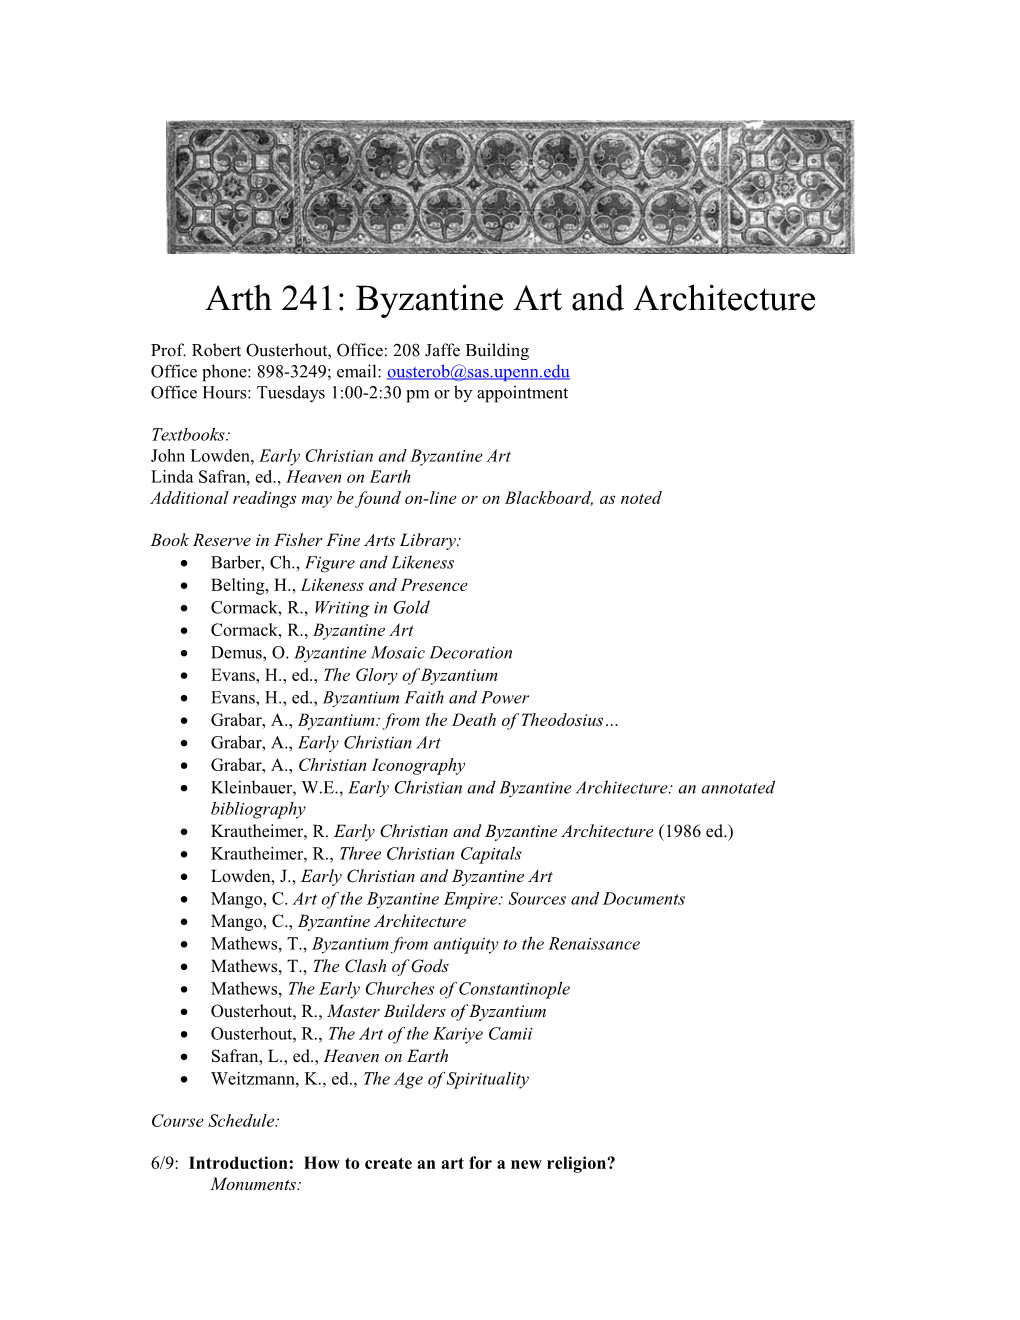 ARTH241 Byzantine Art and Architecture